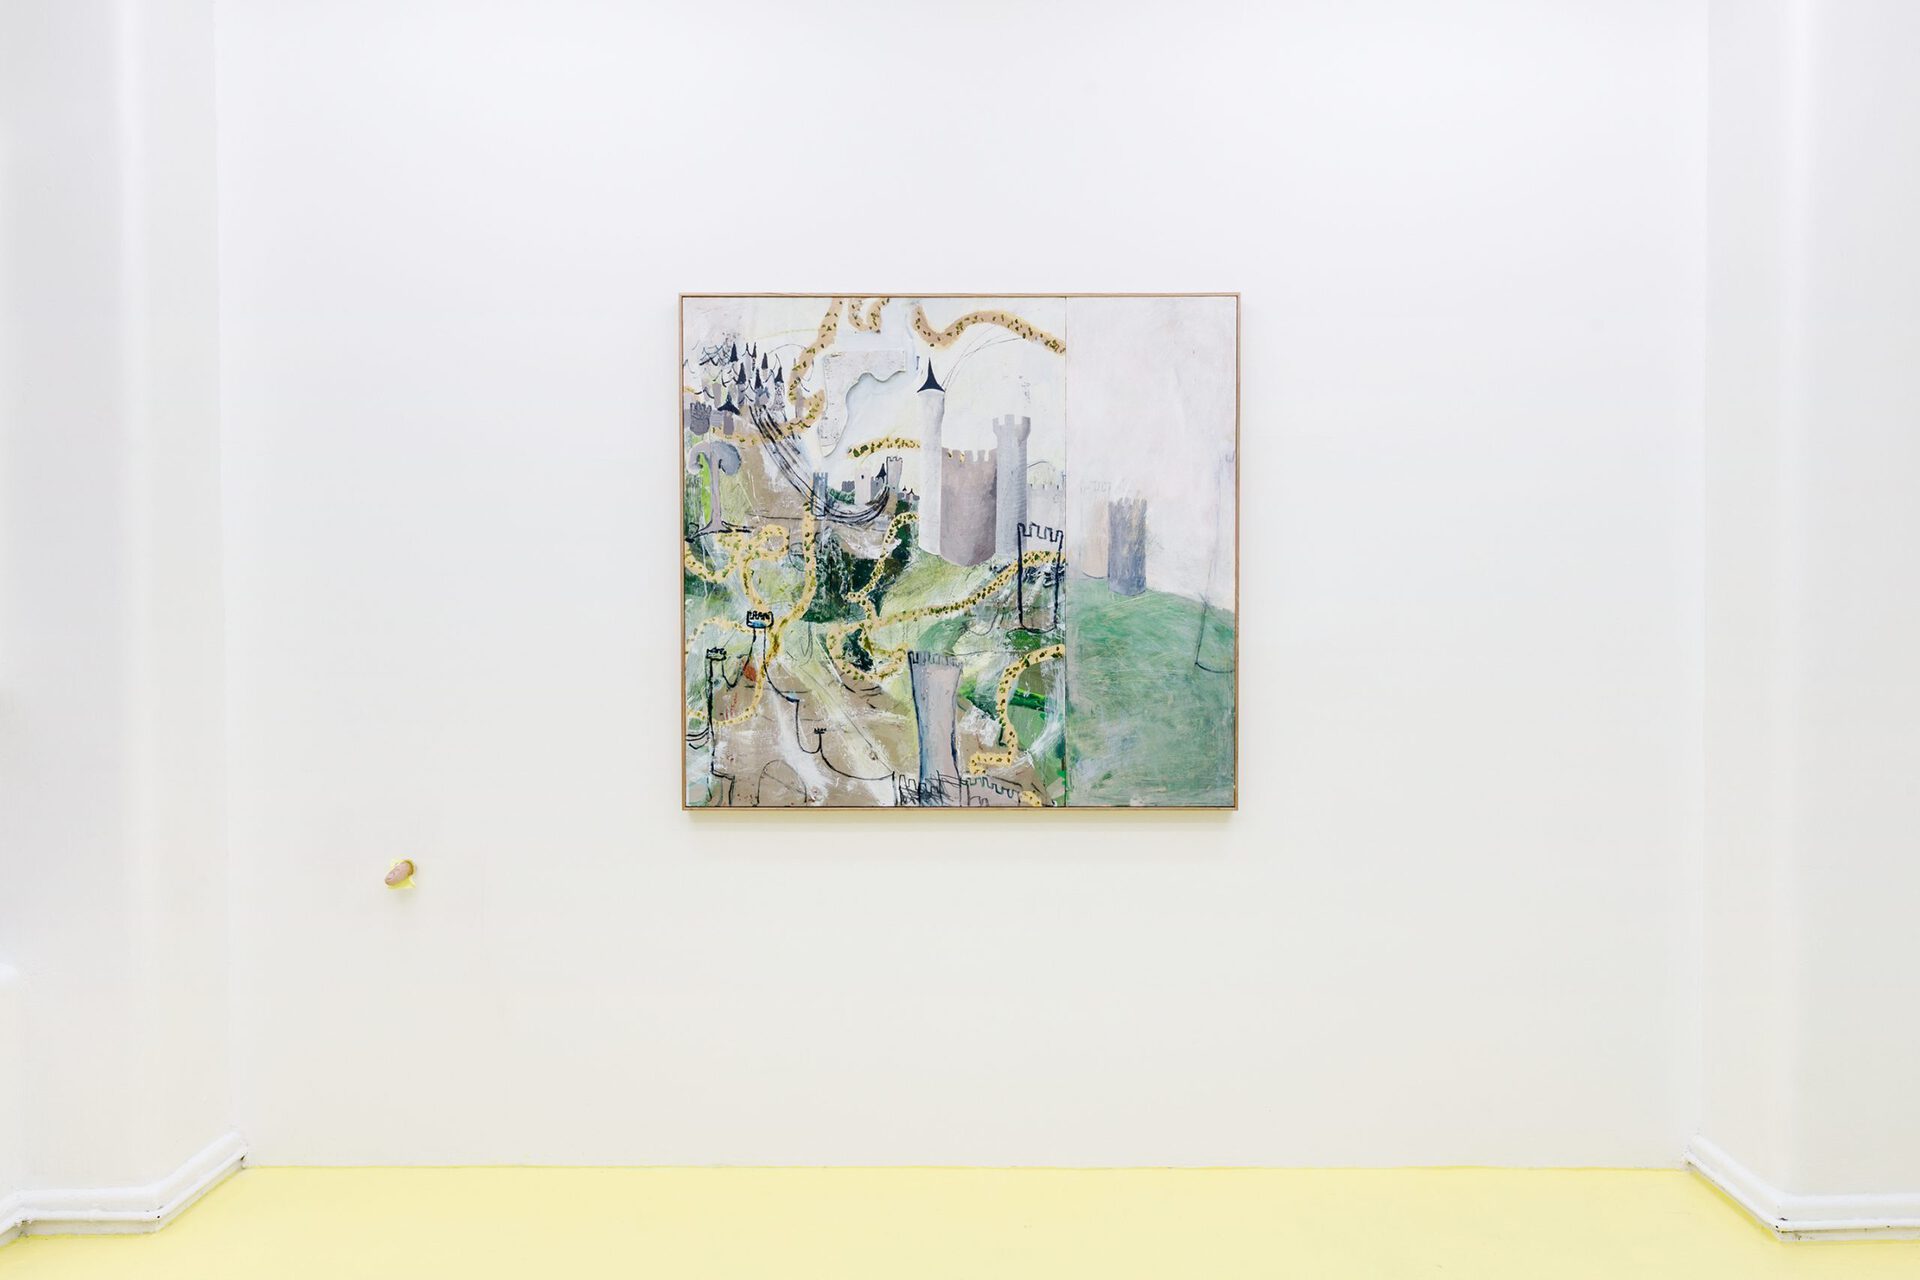 Nick Modrzewski, A Short History of Land Ownership, 2020, Acrylic, charcoal, canvas and wood on board, 120 x 130 cm